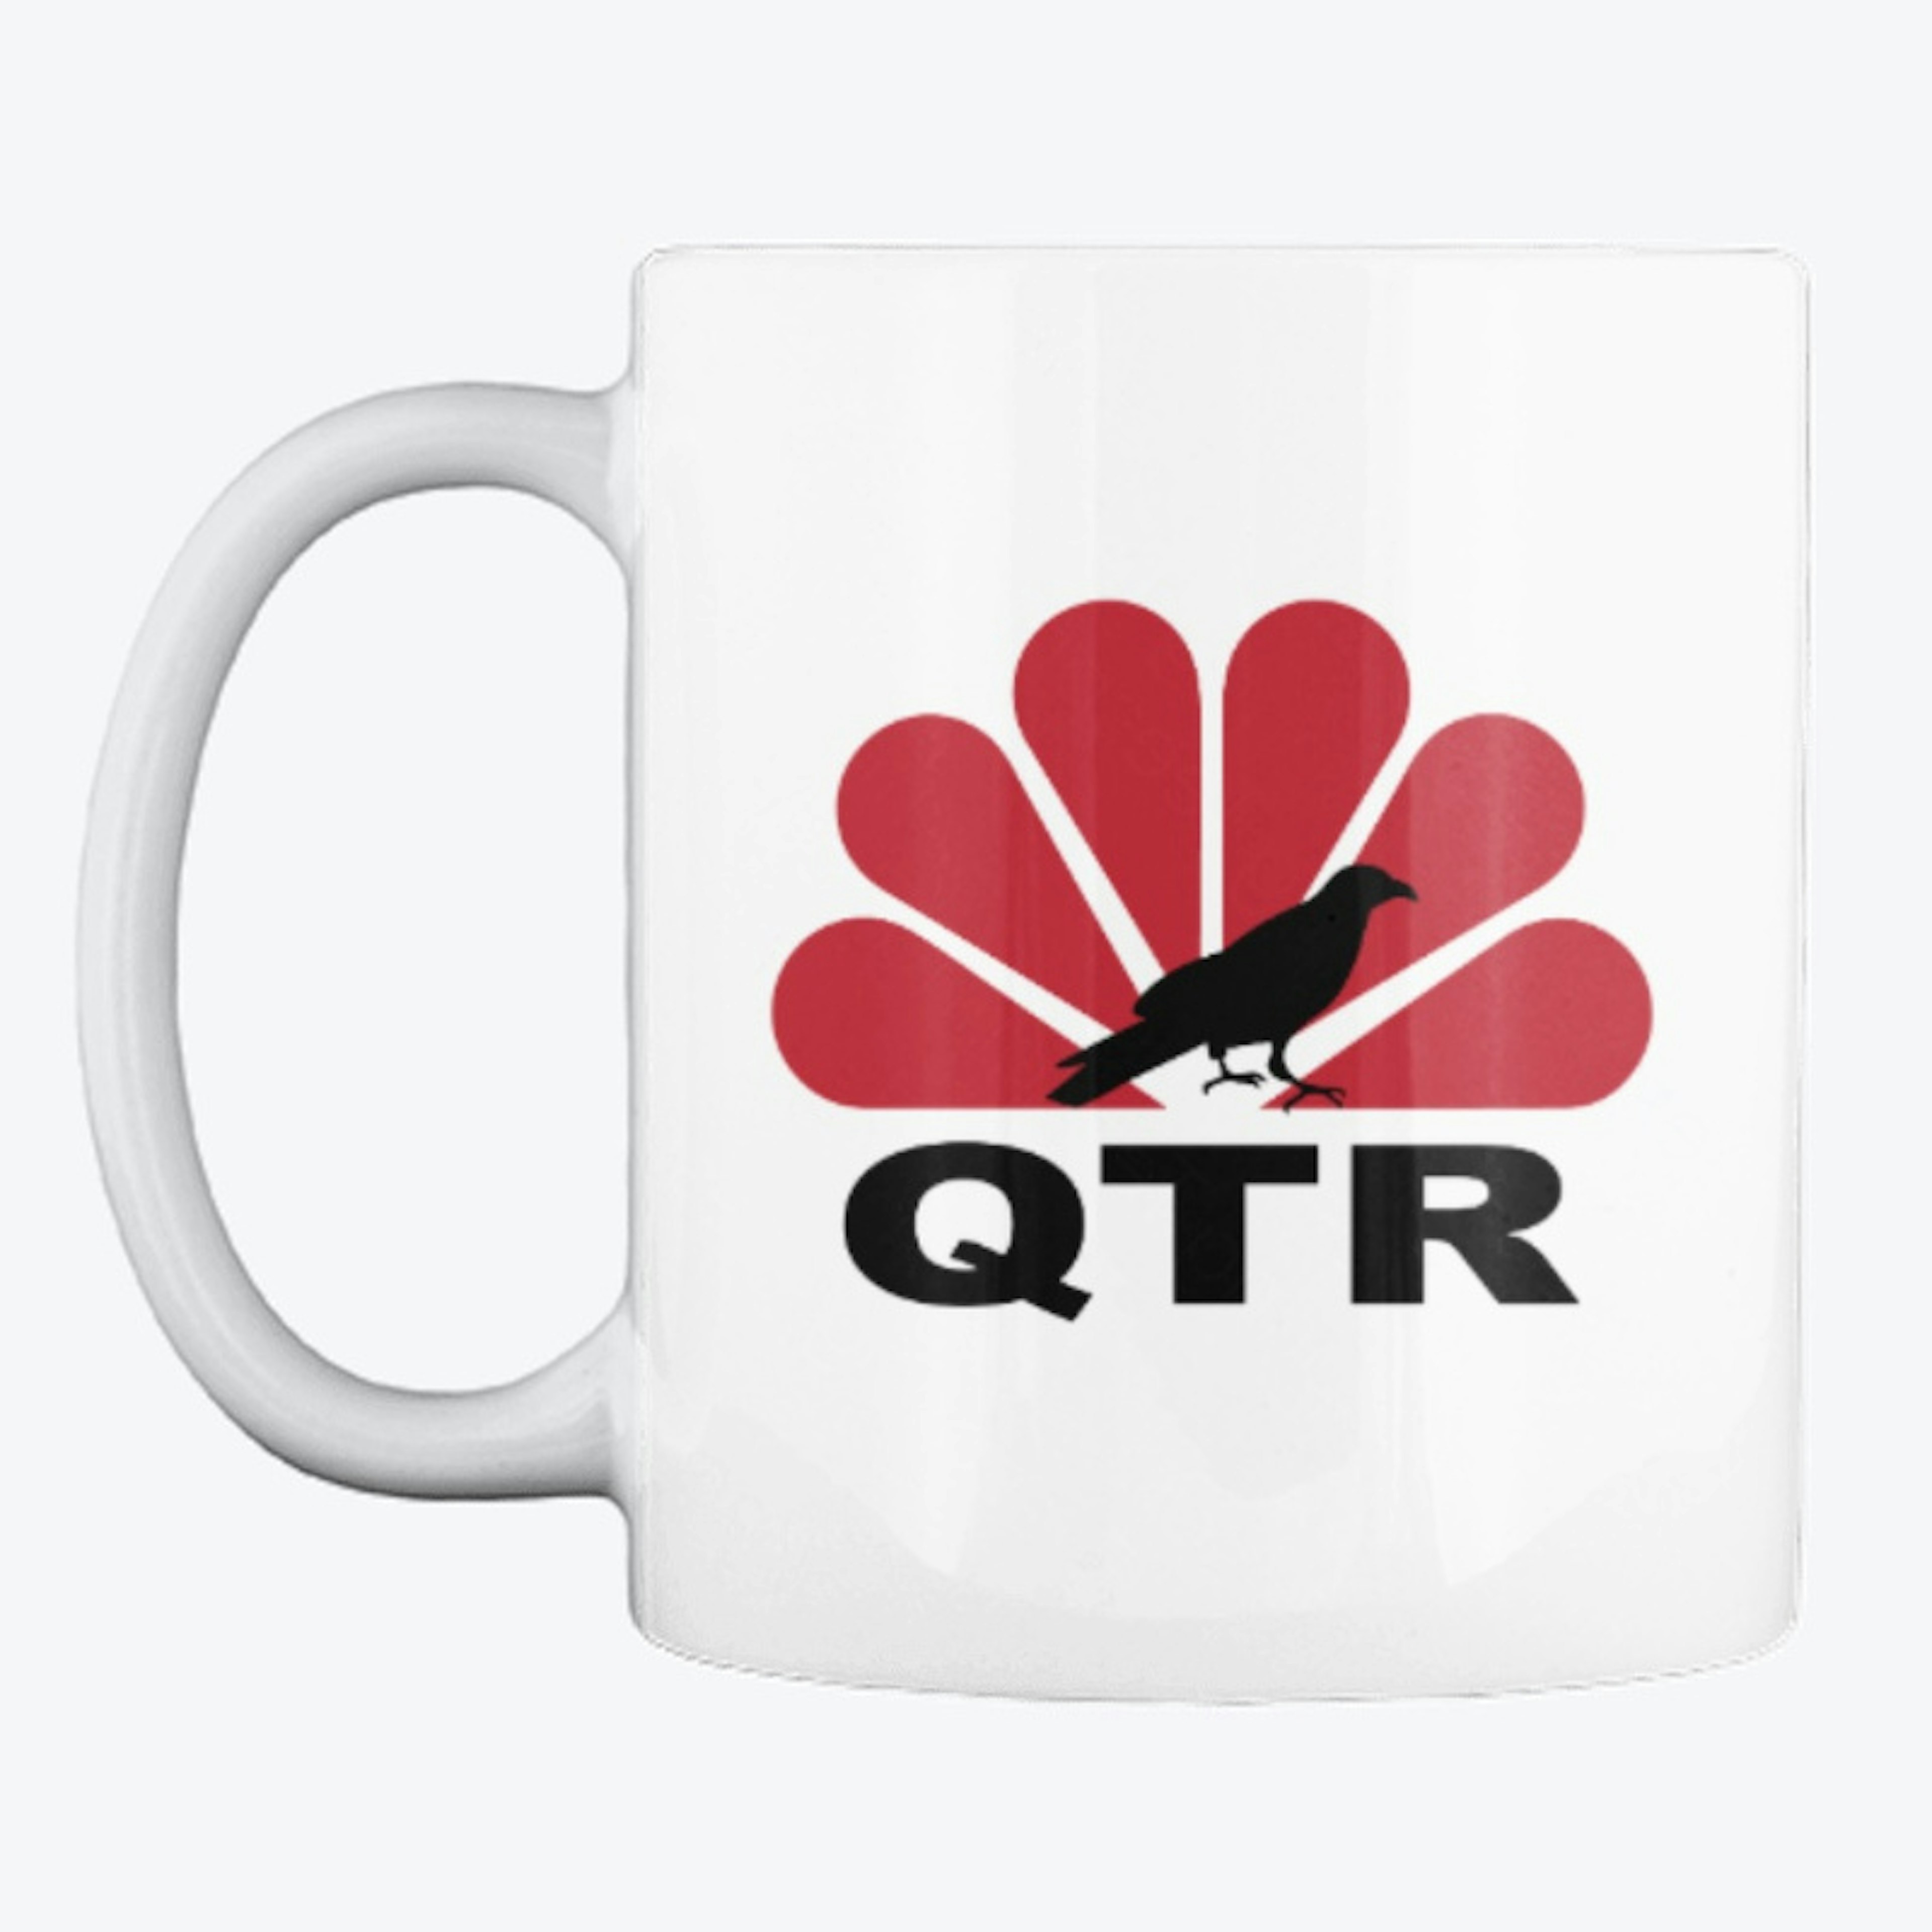 The QTRC Mug